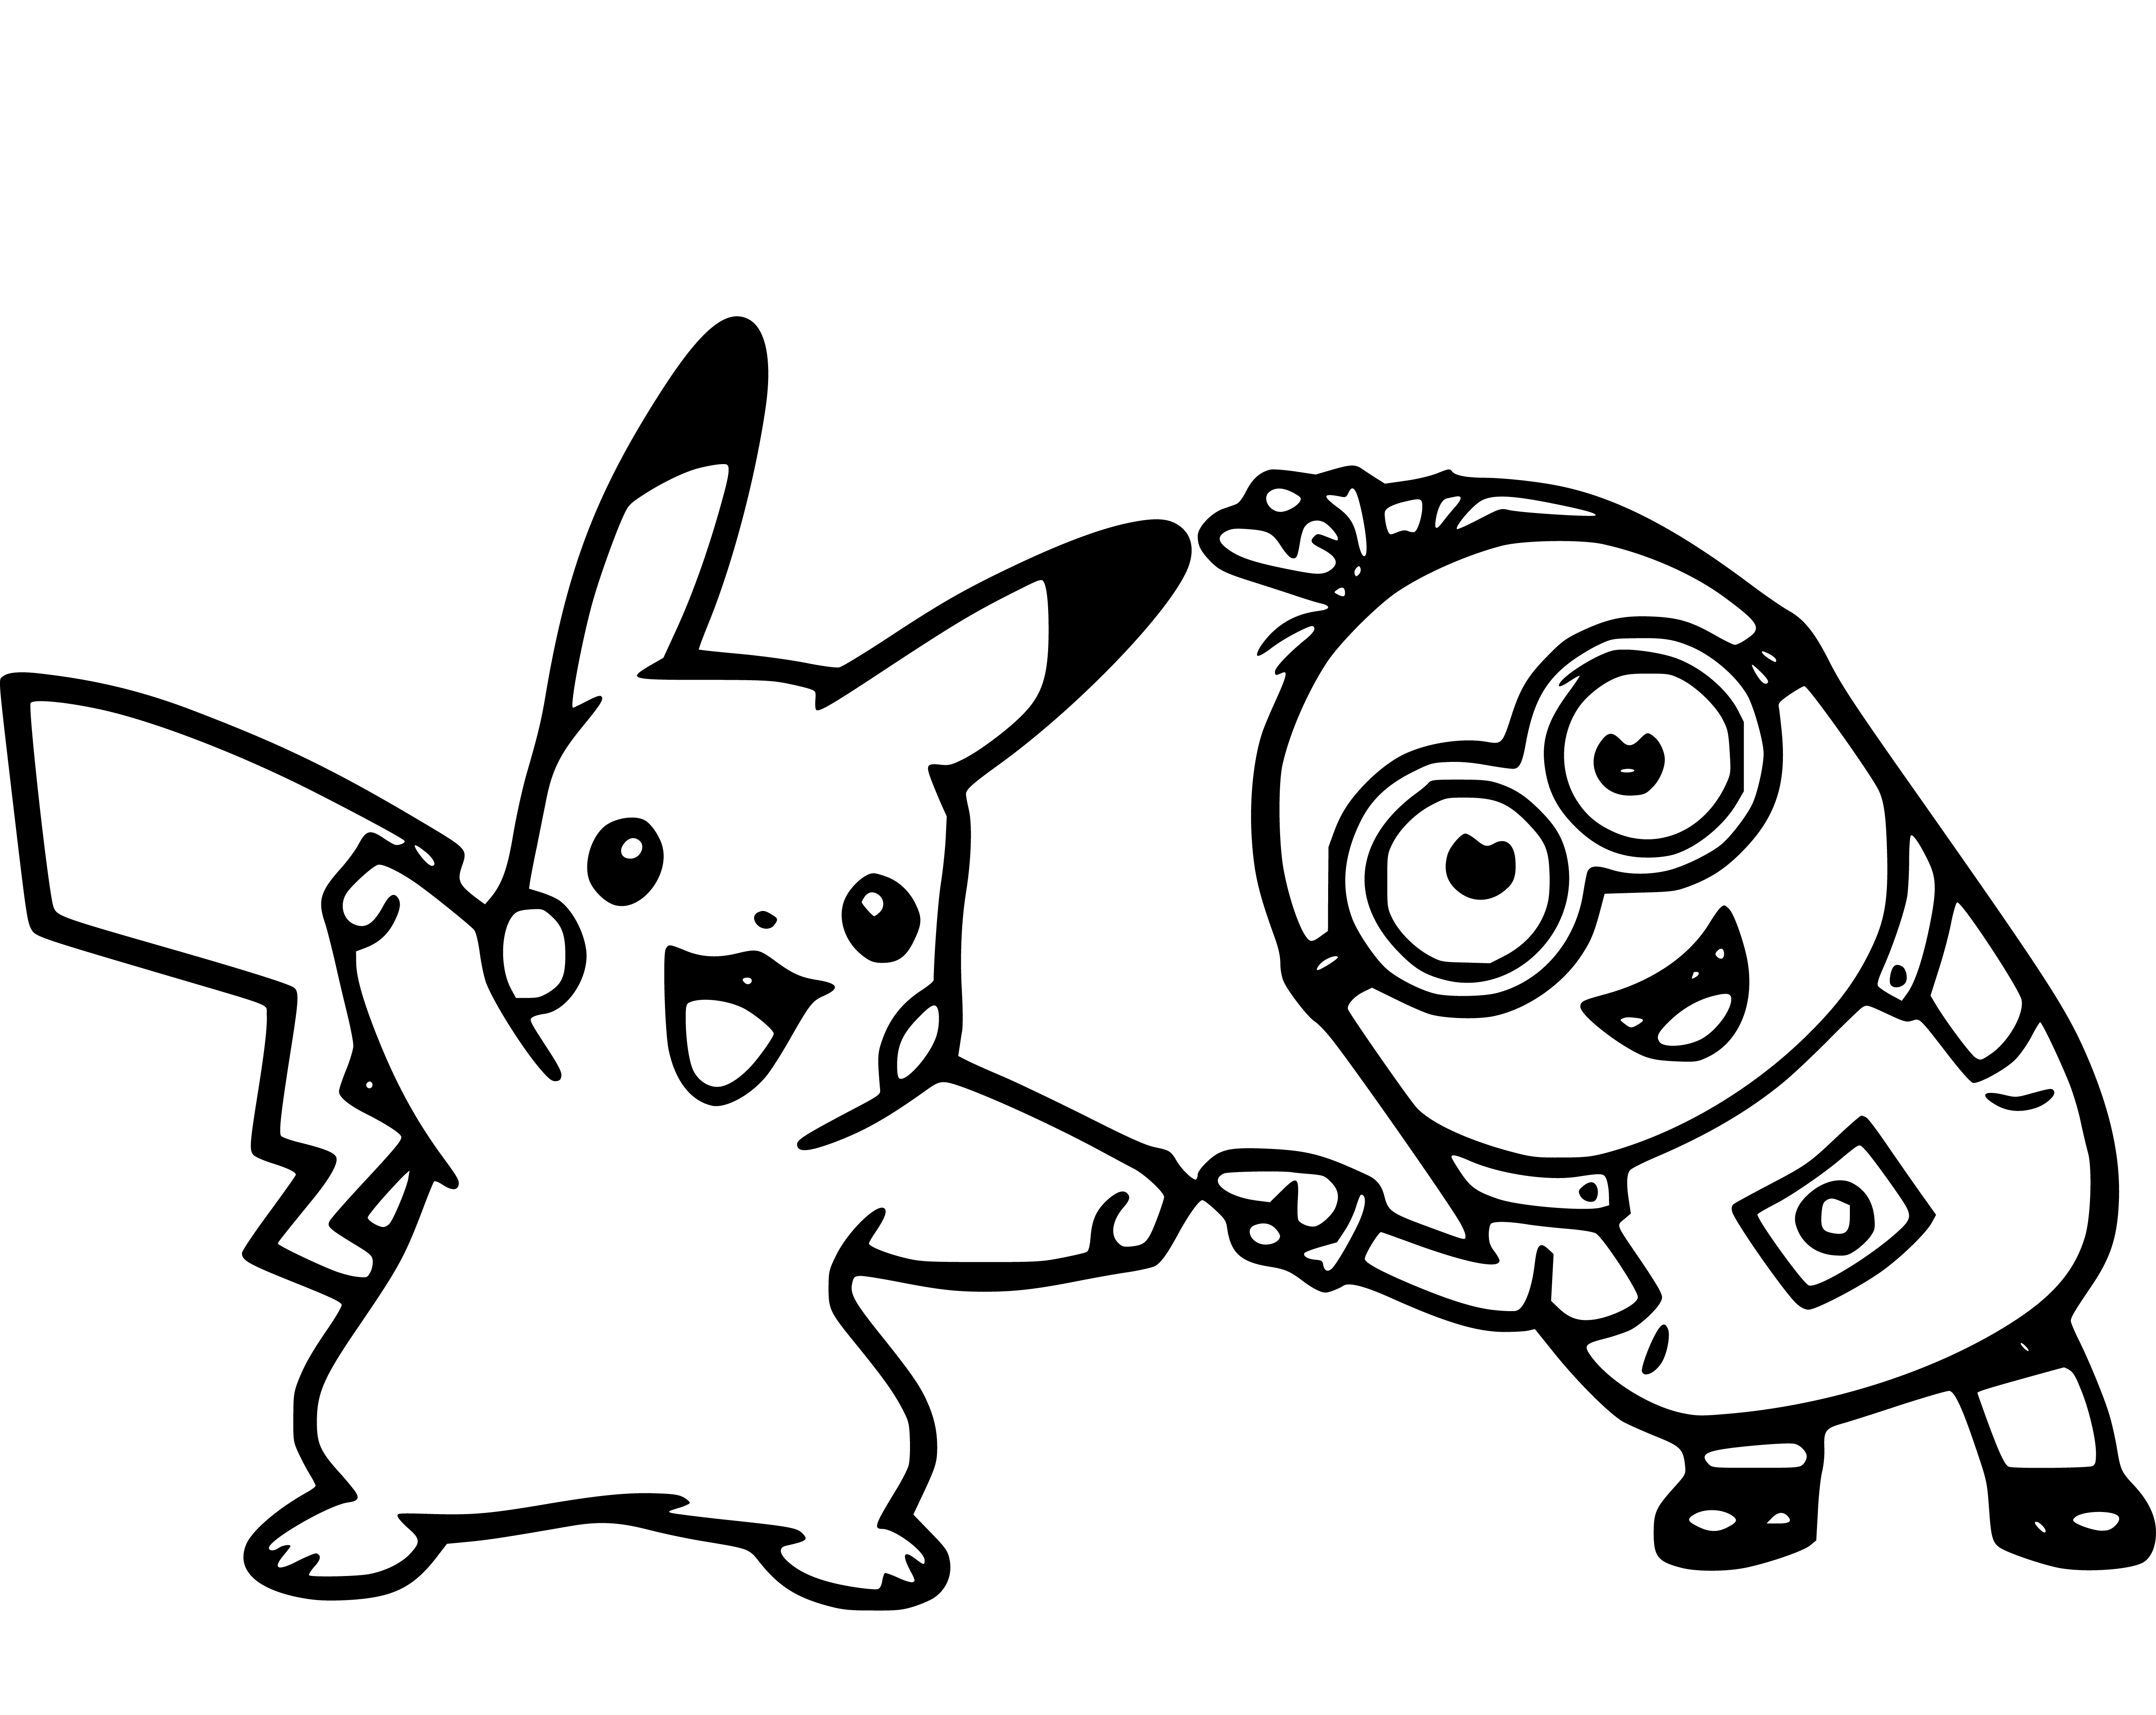 Minion and Pikachu Coloring Page - SheetalColor.com